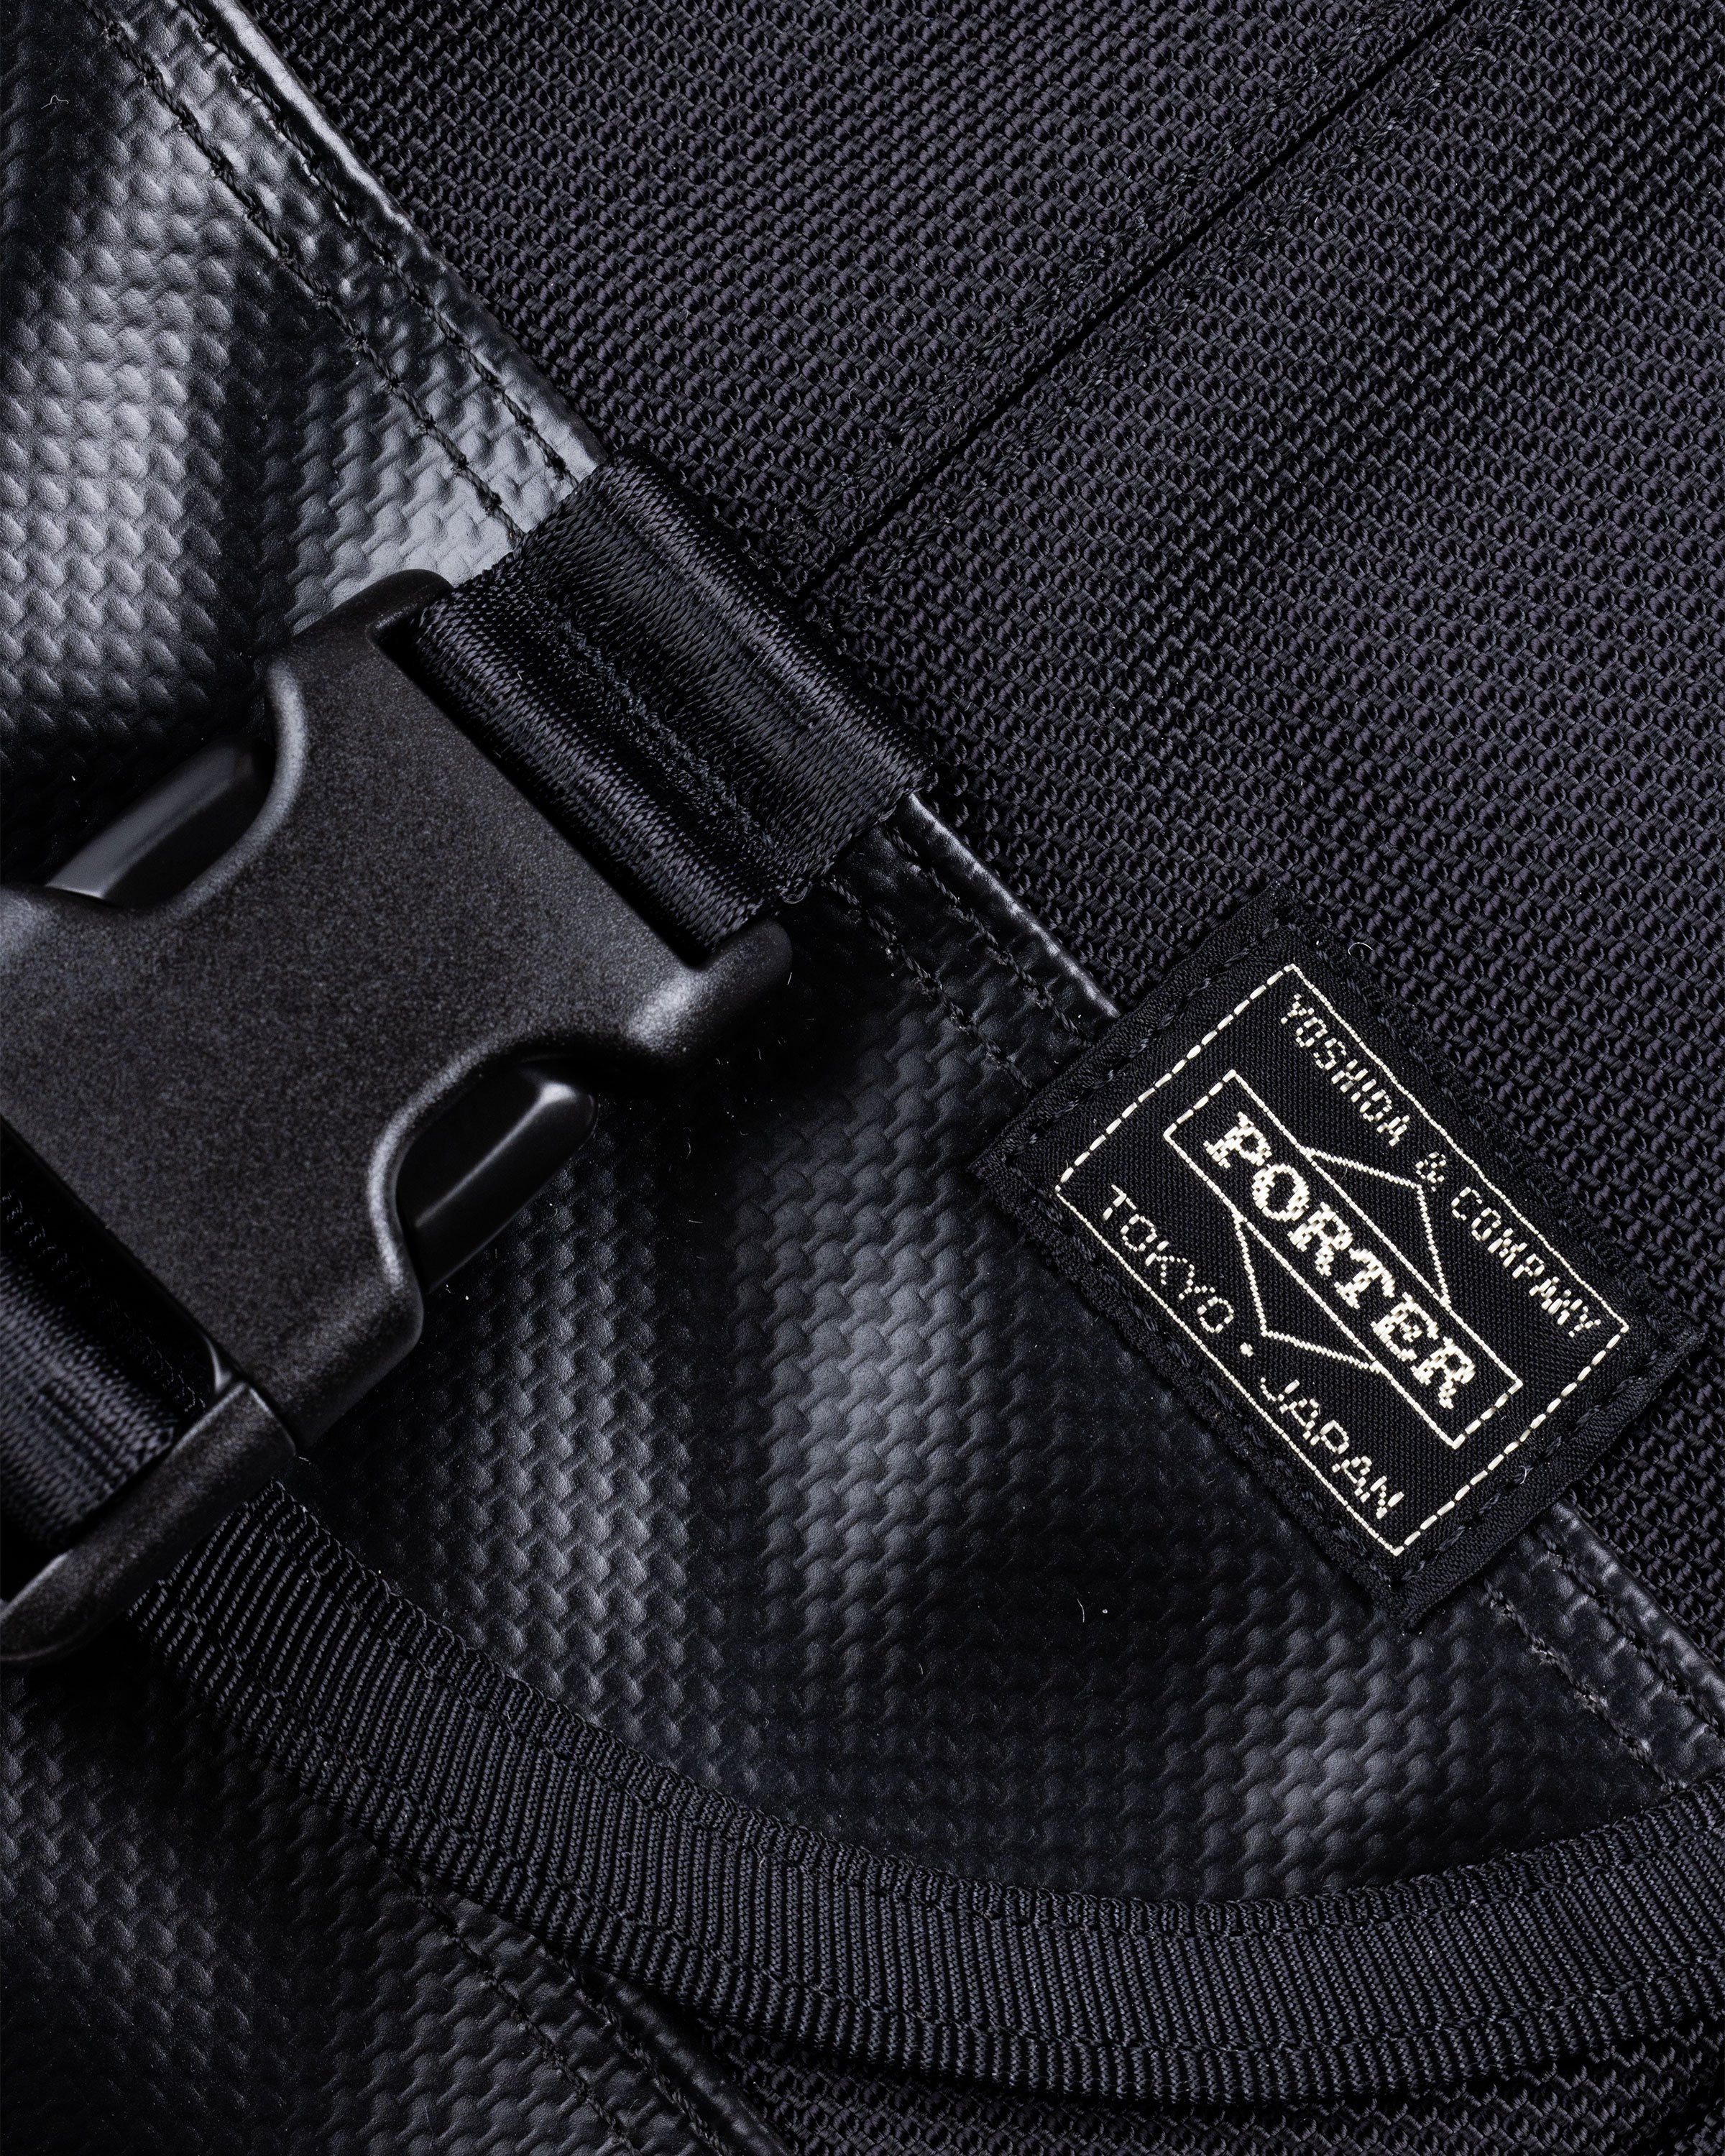 Porter-Yoshida & Co. - Heat Messenger Bag Black - Accessories - Black - Image 7